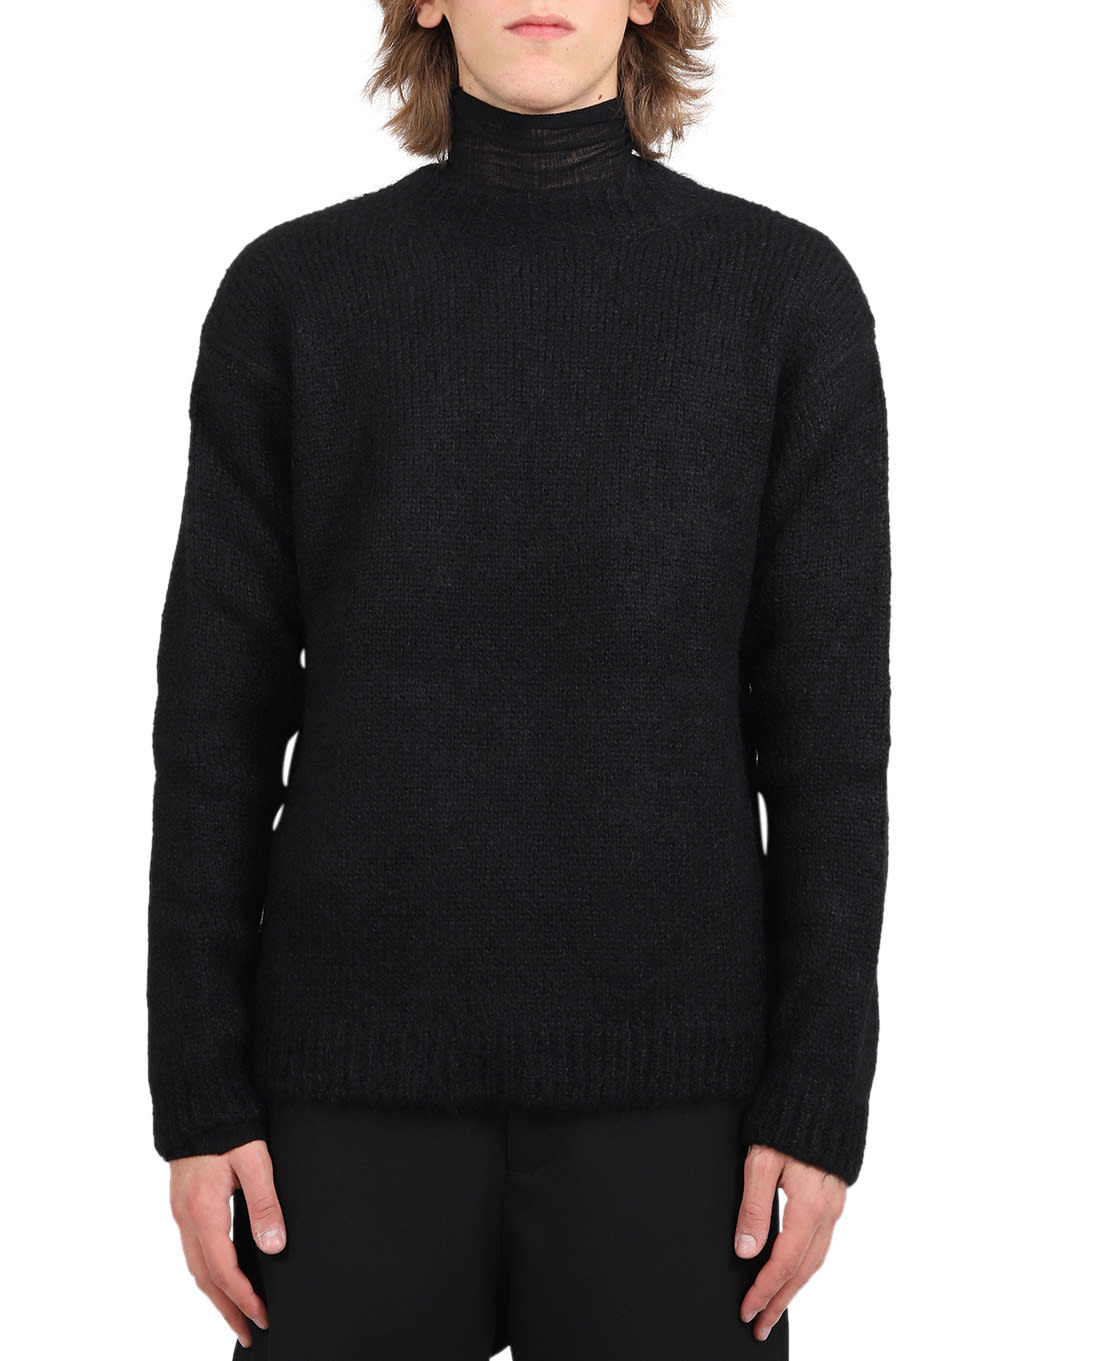 Ann Demeulemeester Black Sweater